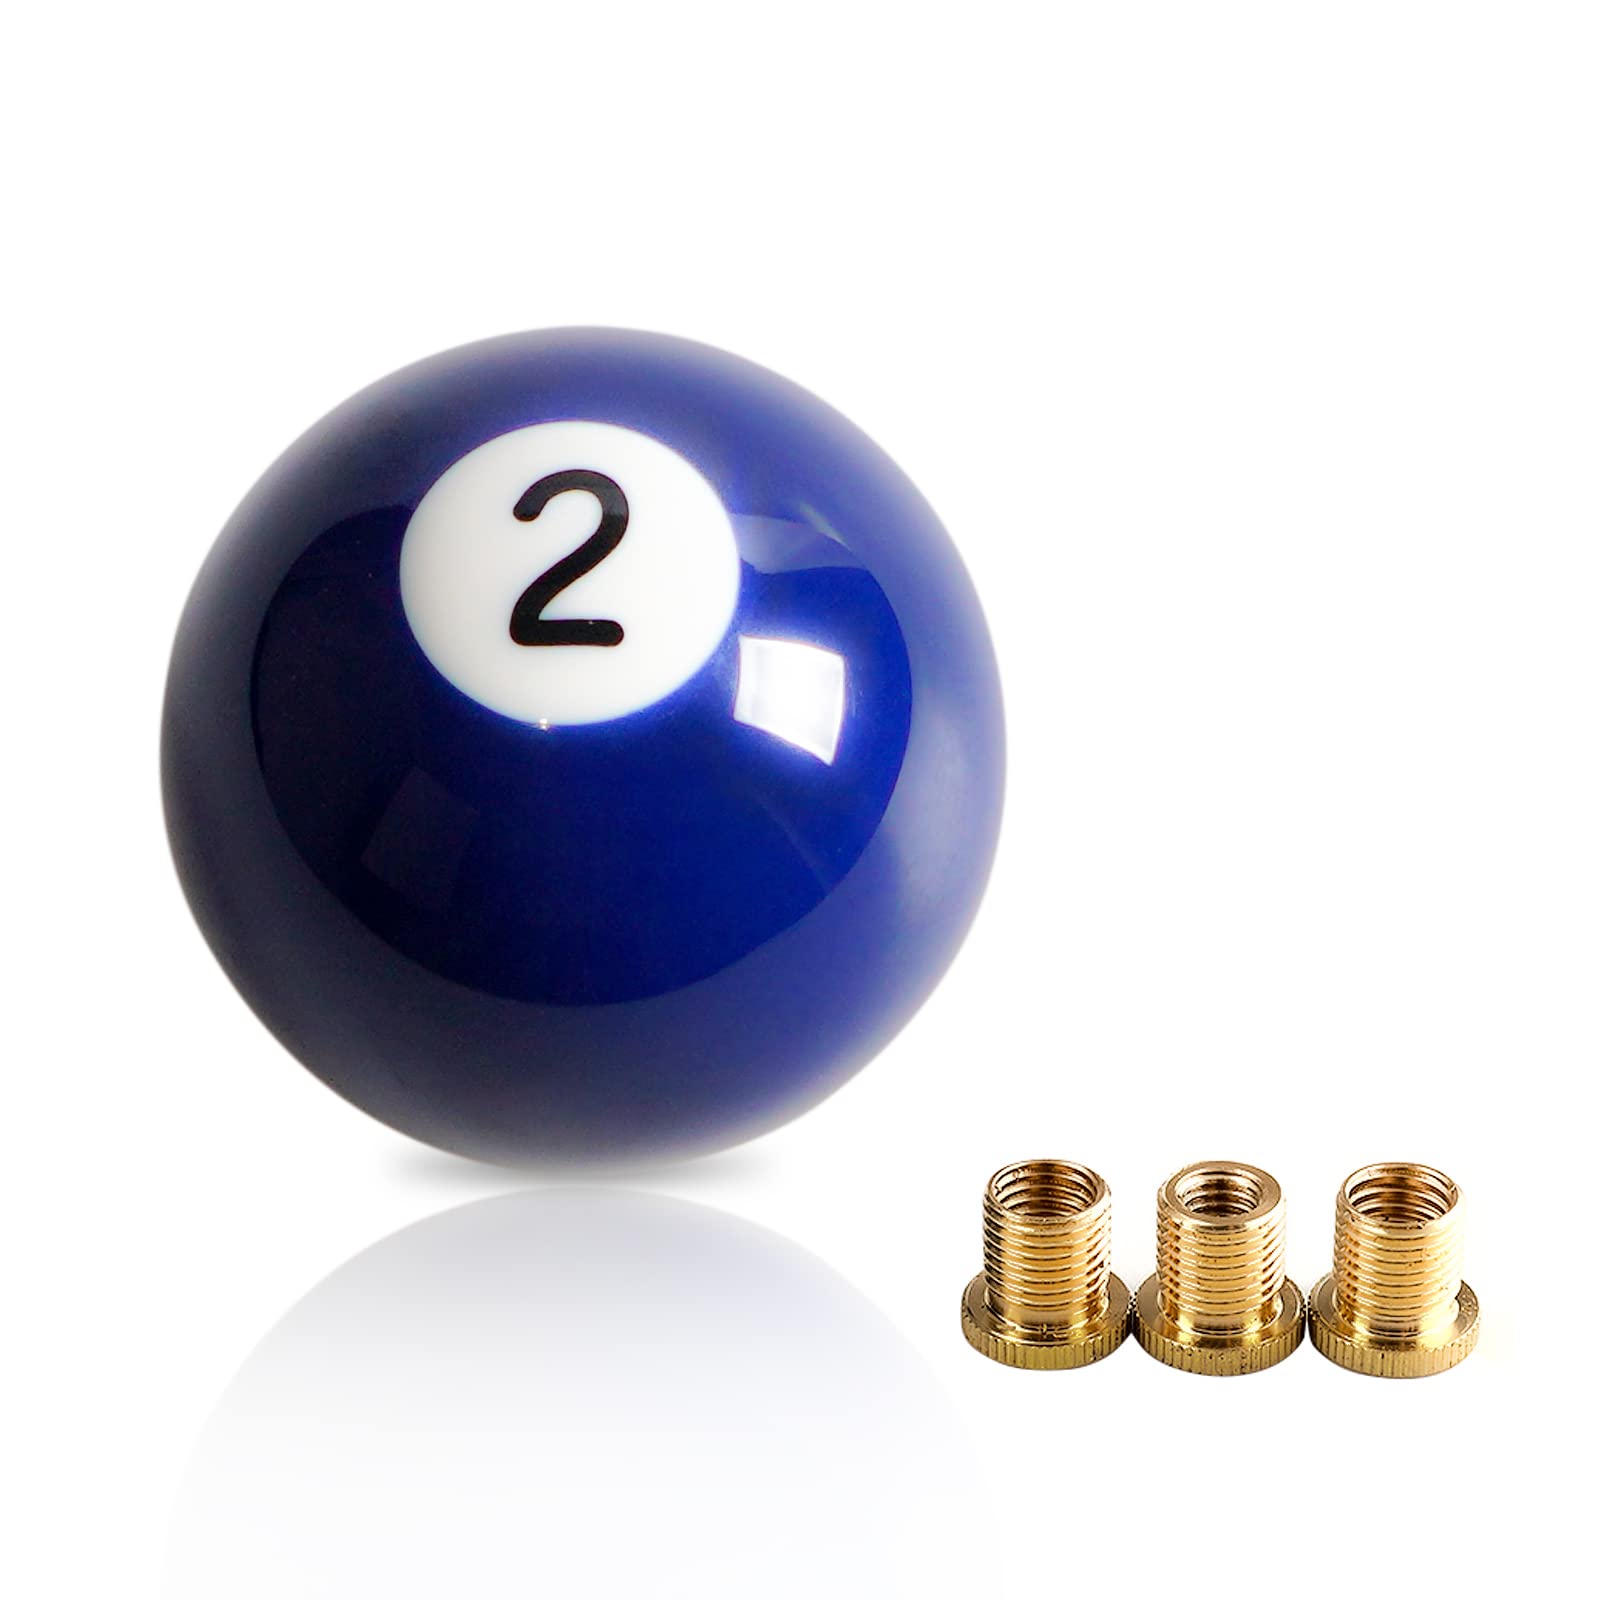 WENJTP Universal Fit for Manual Car Acrylic Gear Shift Knob 2 Ball Billiard Blue Round Shift Knob